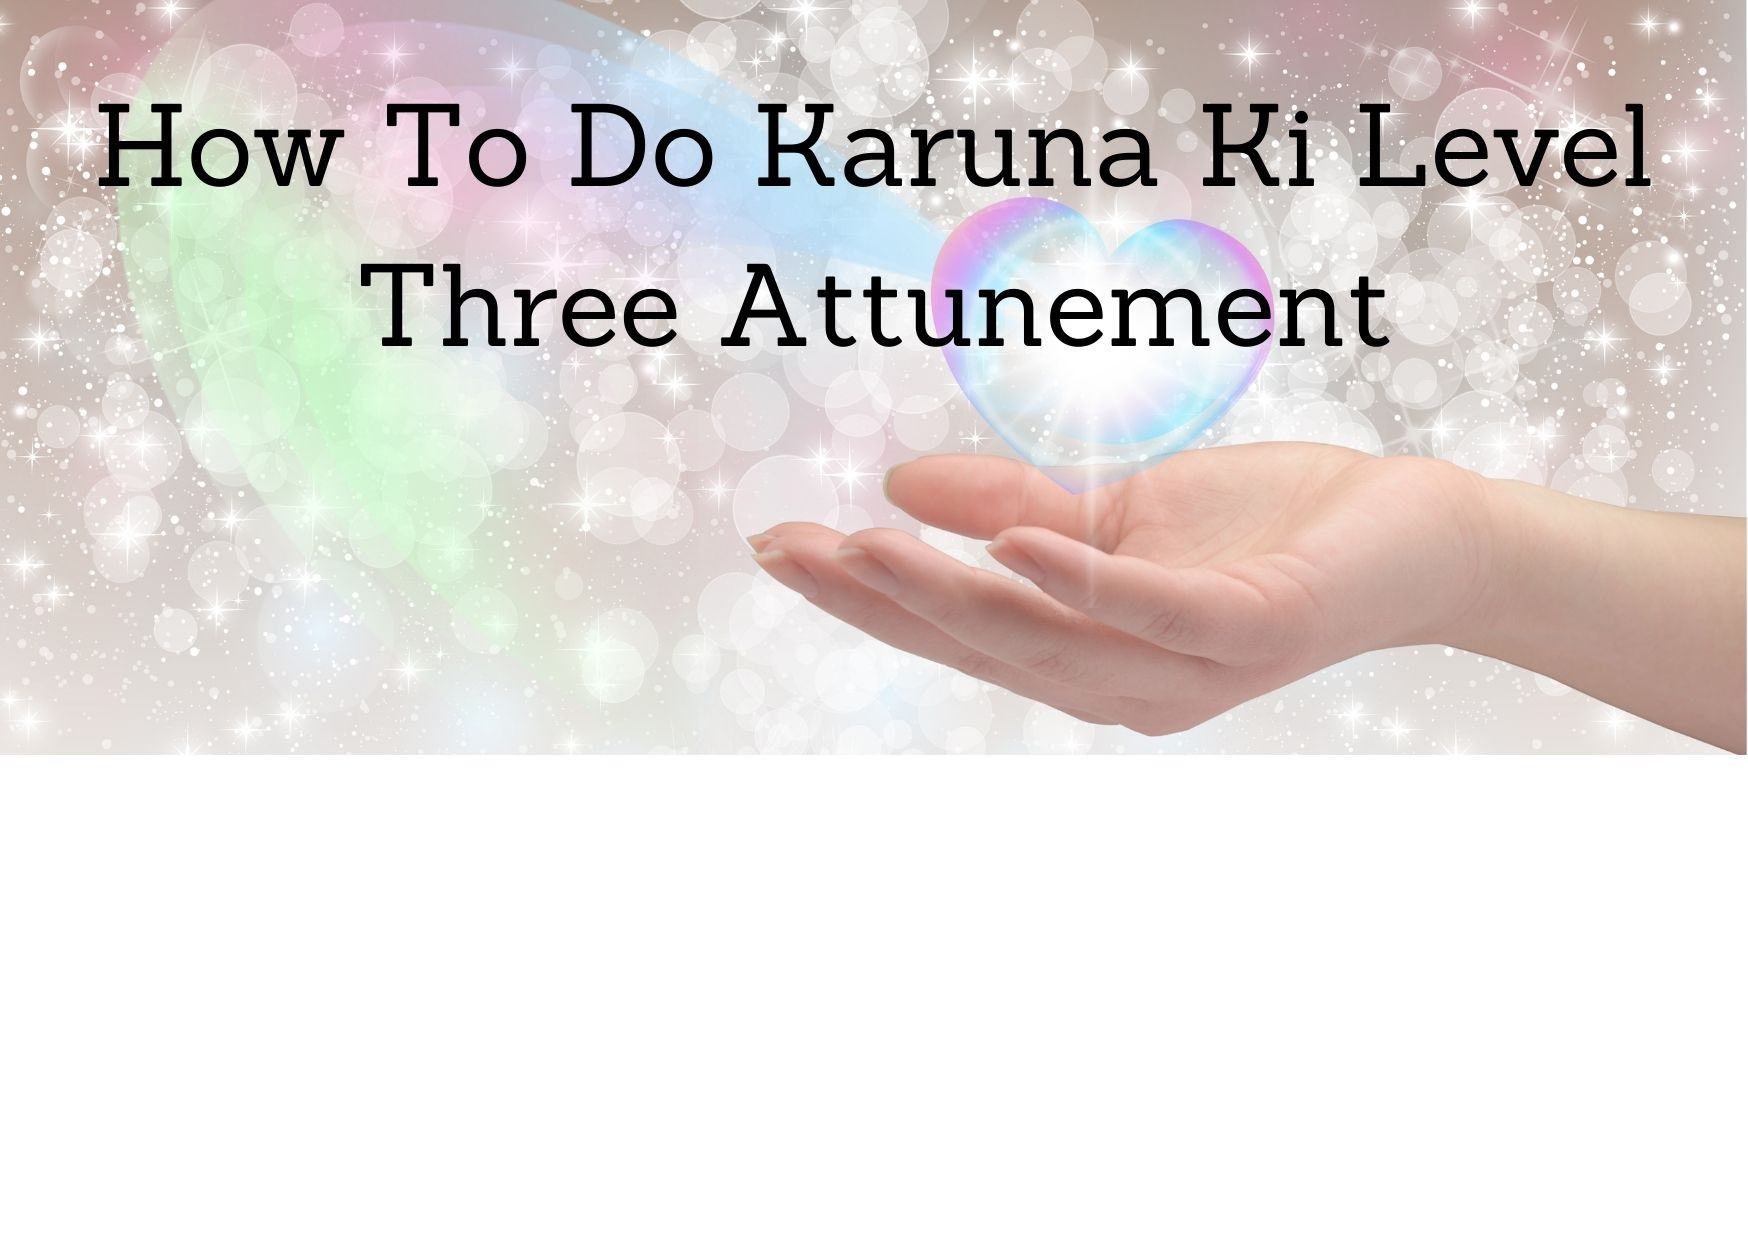 How To Achieve Karuna Ki Level Three Attunement